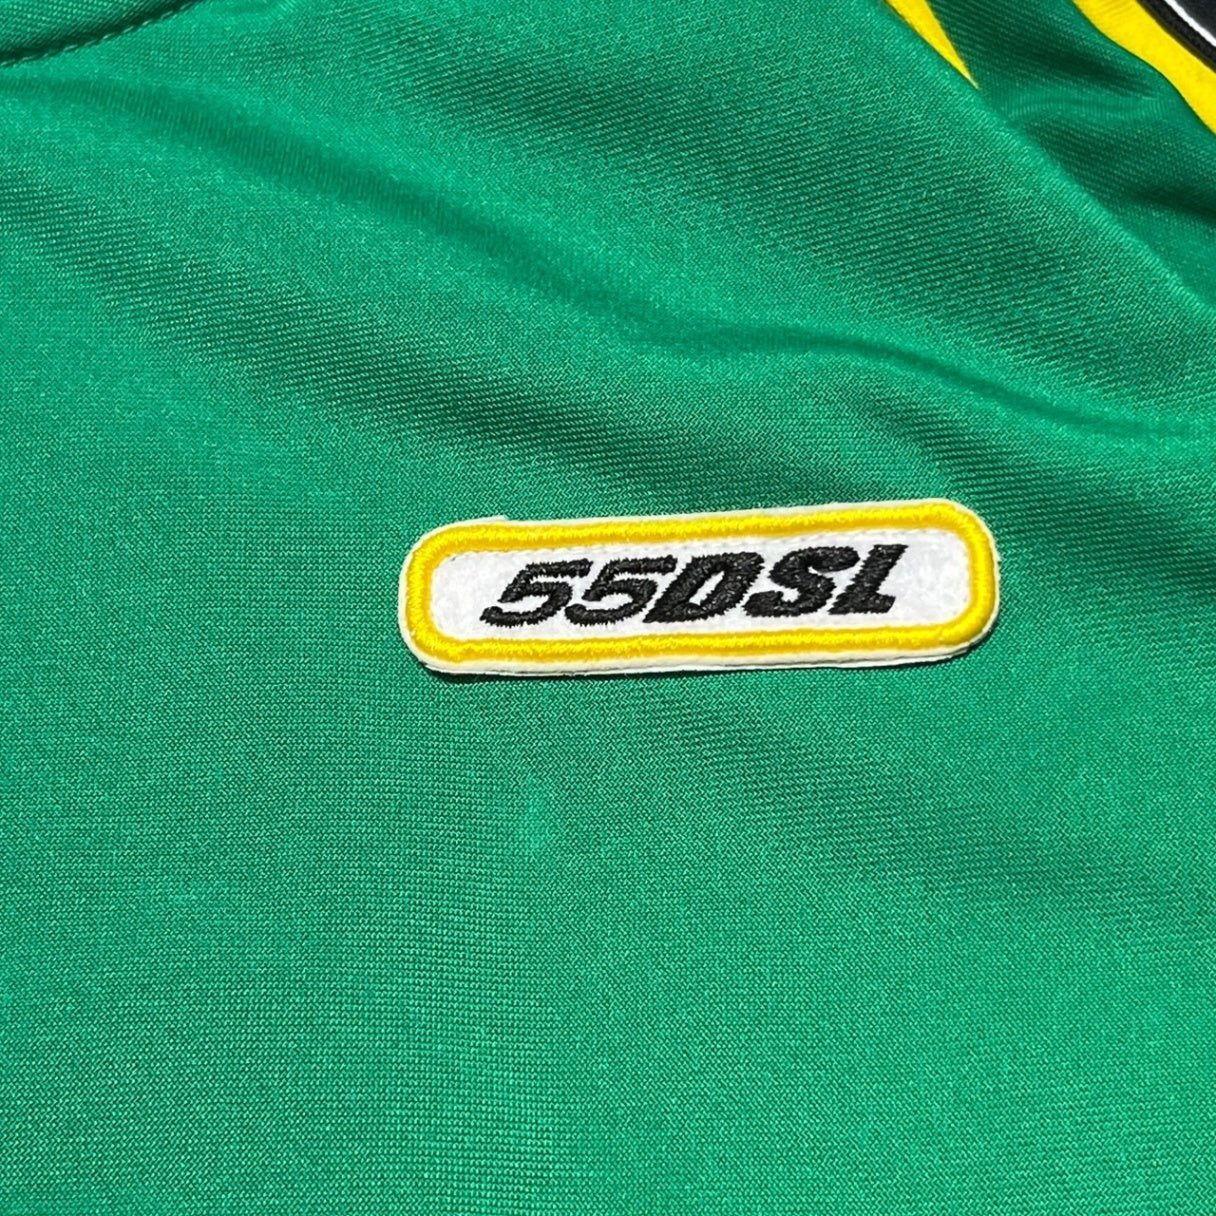 DIESEL(ディーゼル) AMST-SMEETCH  logo track jacket ロゴ トラック ジャケット A05820 S グリーン×イエロー ジャージ ブルゾン